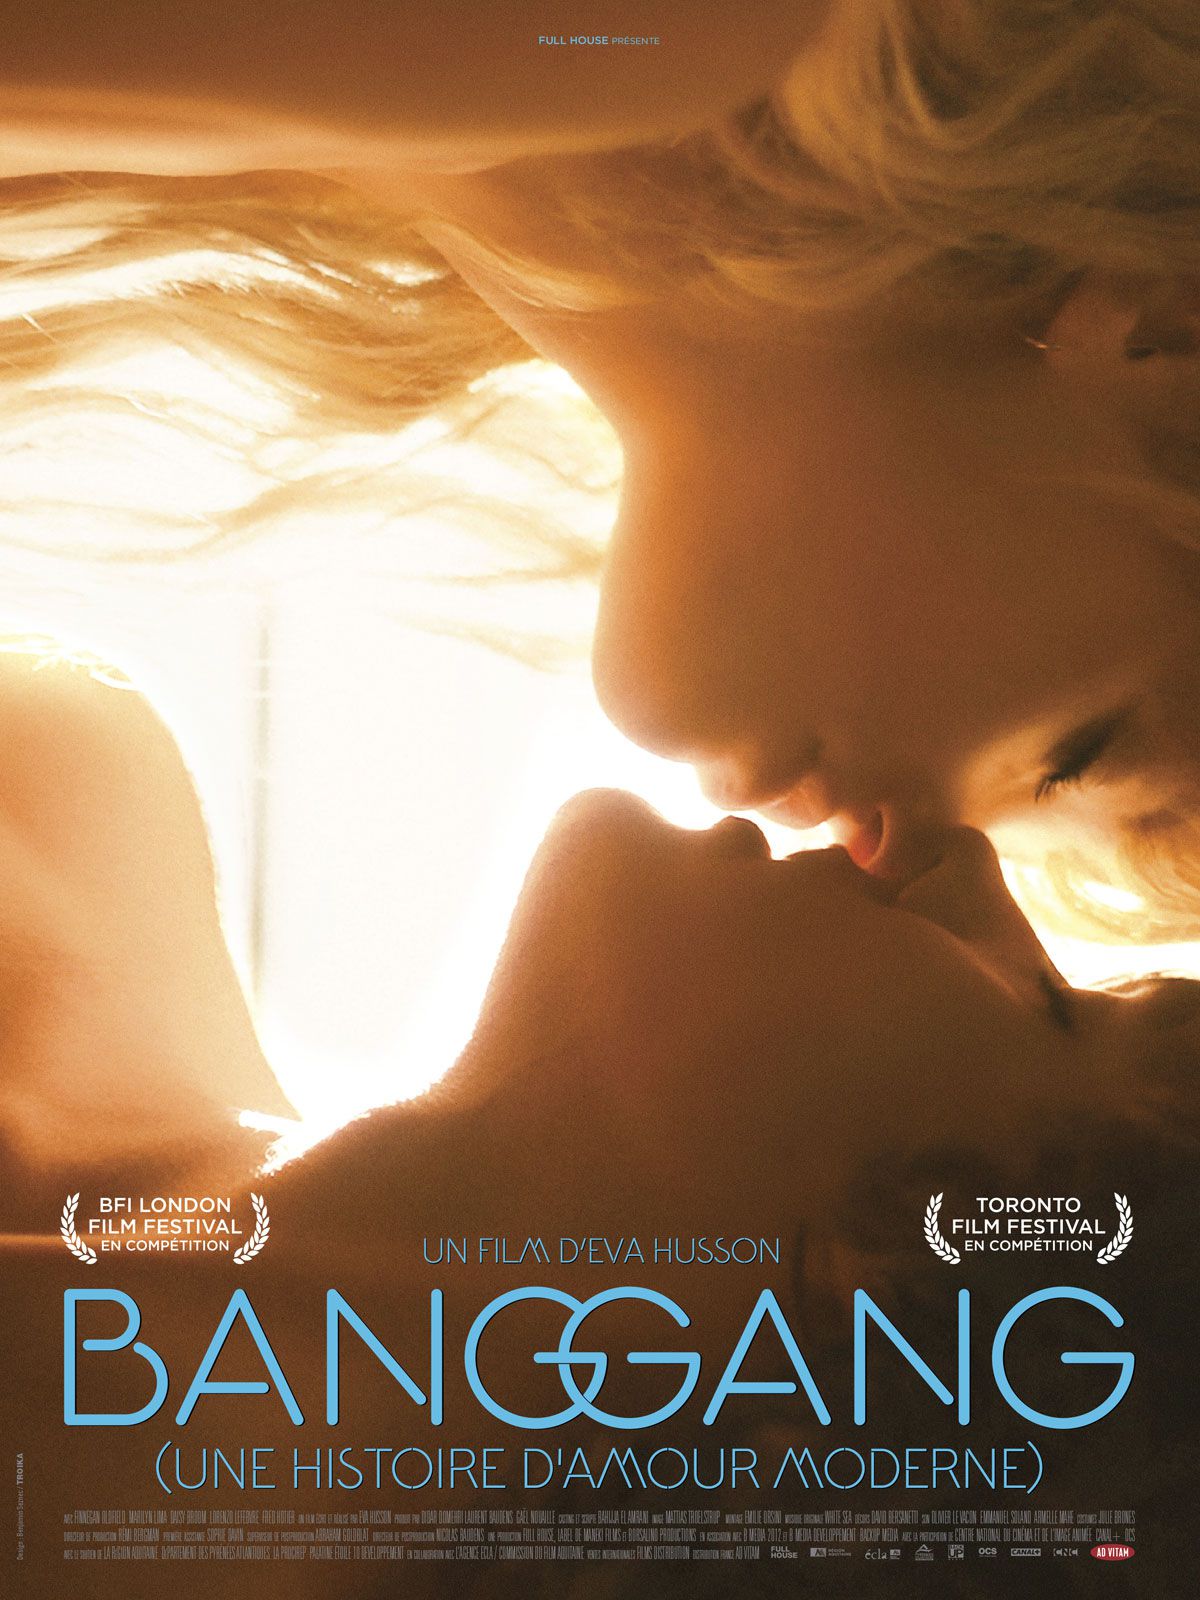 Bang Gang (une histoire d'amour moderne) - Film (2016) streaming VF gratuit complet